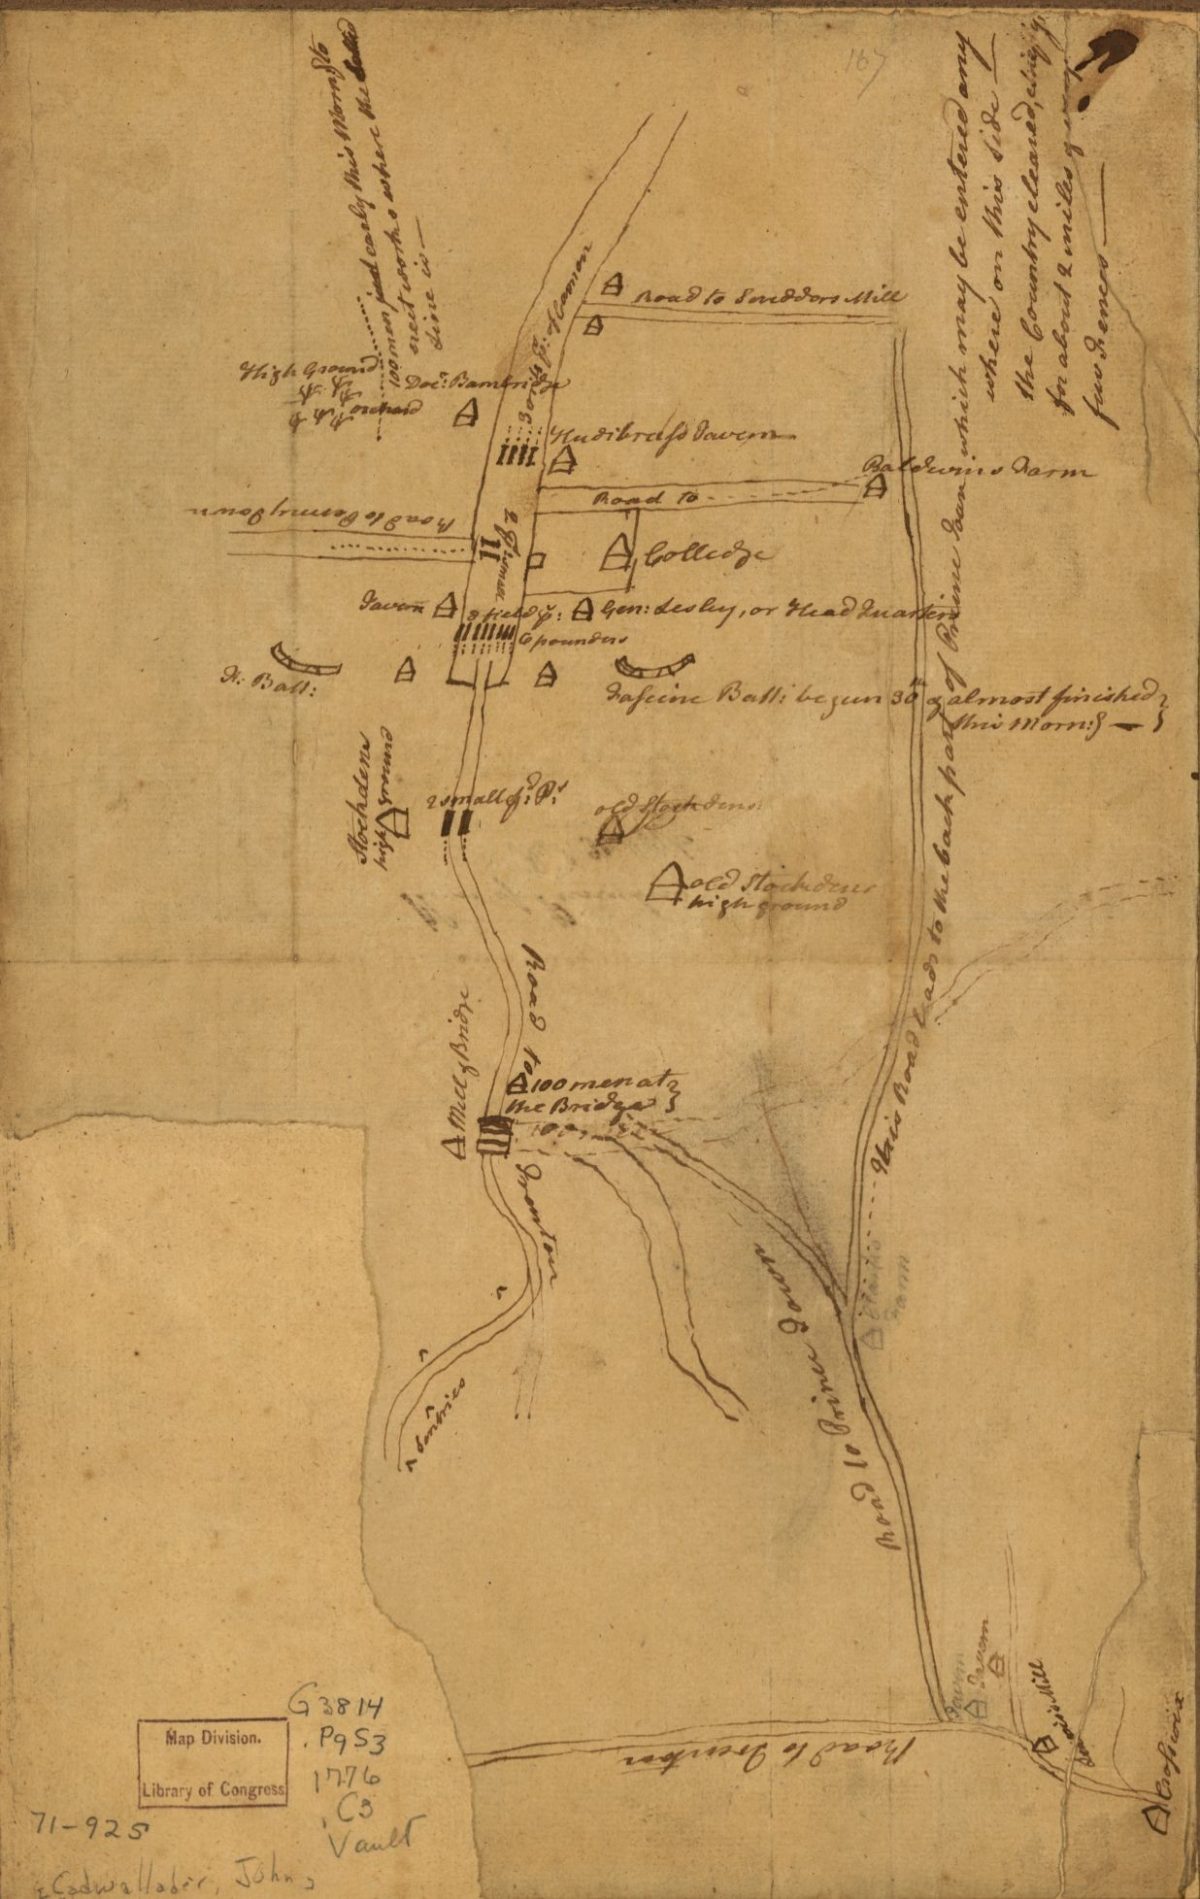 John Cadwalader's "Spy Map" of Princeton